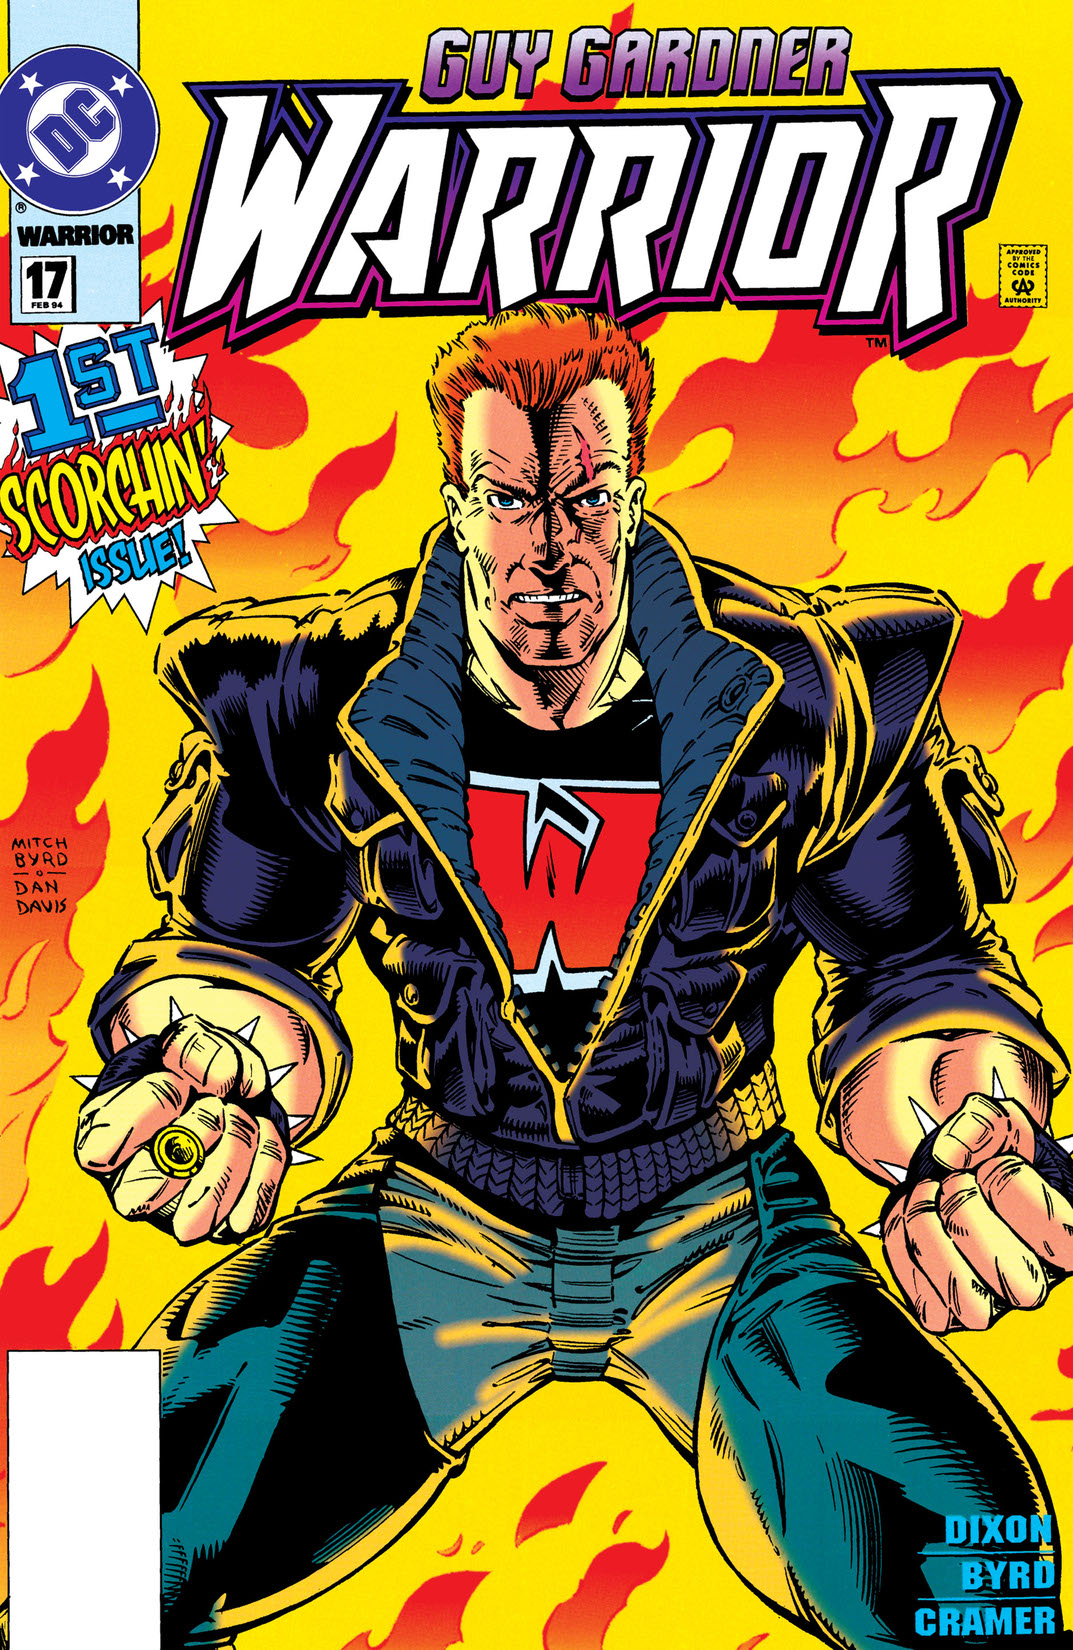 Guy Gardner: Warrior #17 preview images